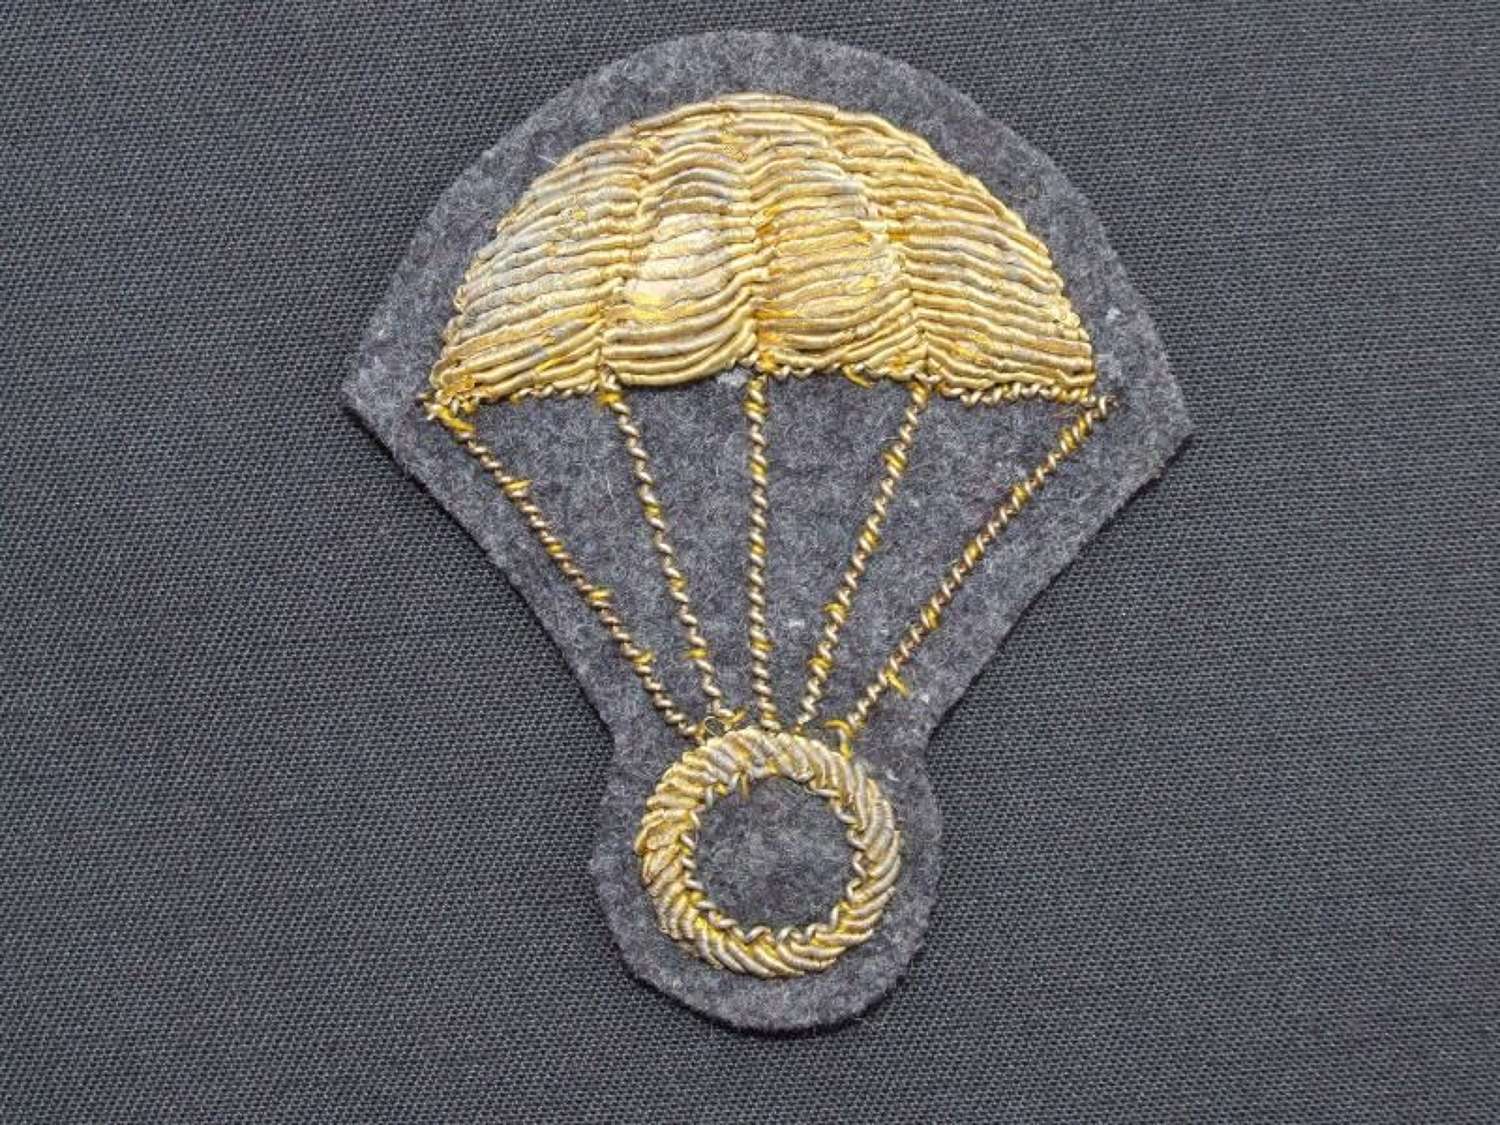 WW11 Italian Paratroop Officer's Sleeve Insignia